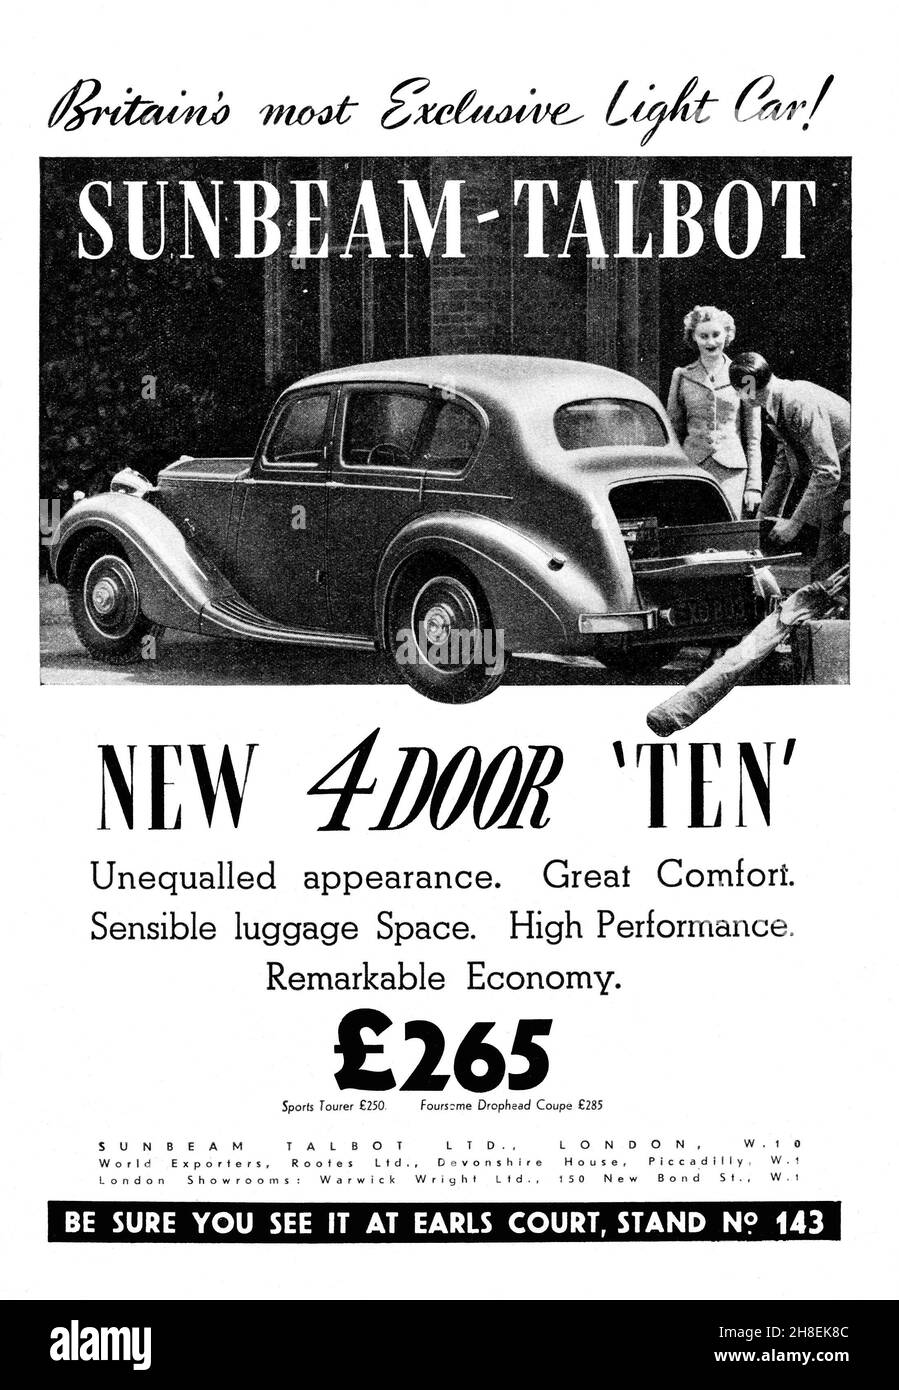 A 1938 vintage Sunbeam Talbot advert from The Autocar Magazine Stock Photo